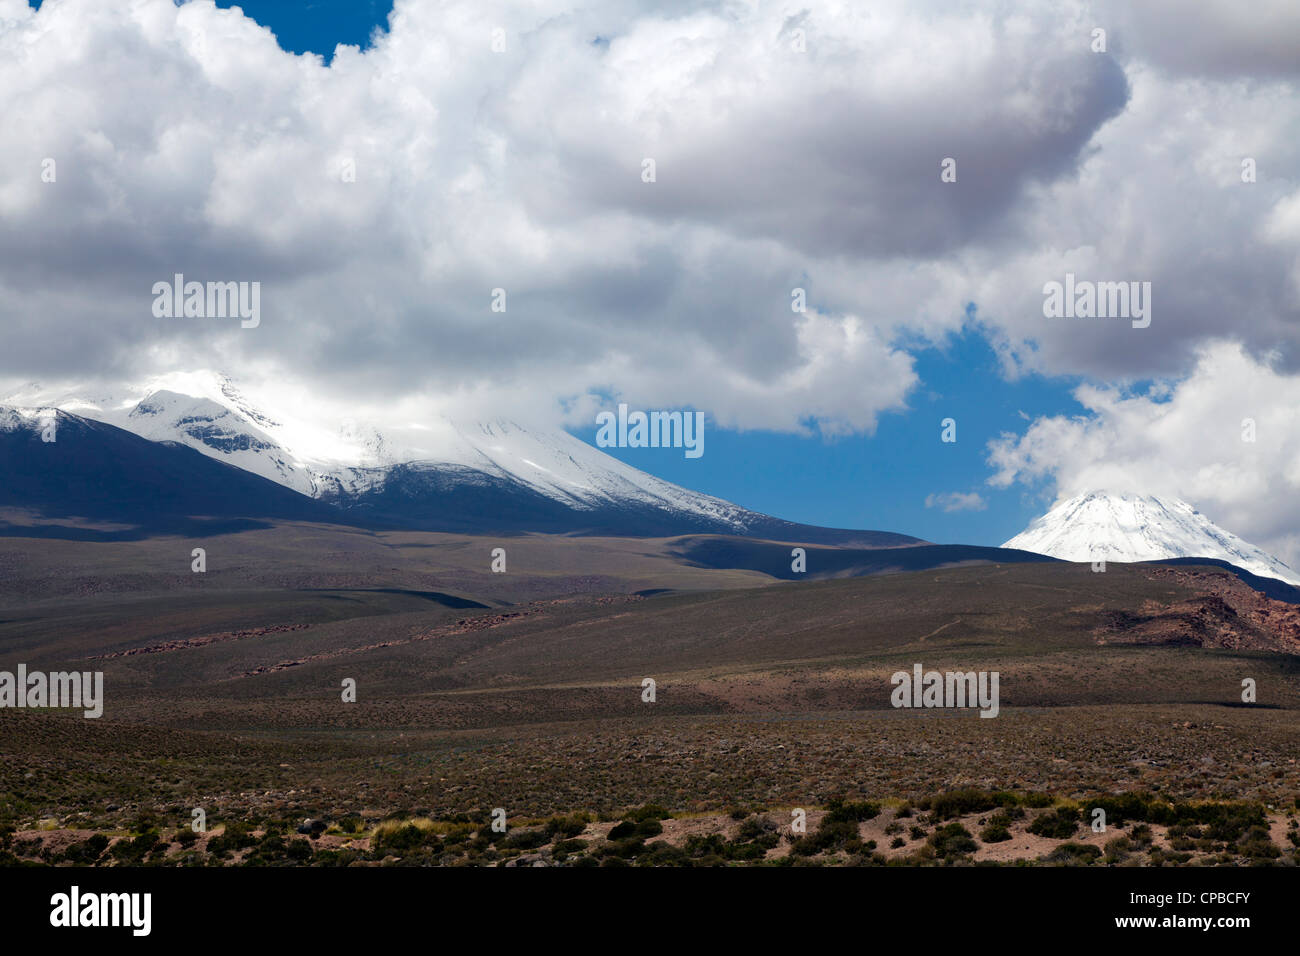 Lascar volcano surrounded by clouds, near Nacimient Gorge, San Pedro de Atacama, Chile Stock Photo